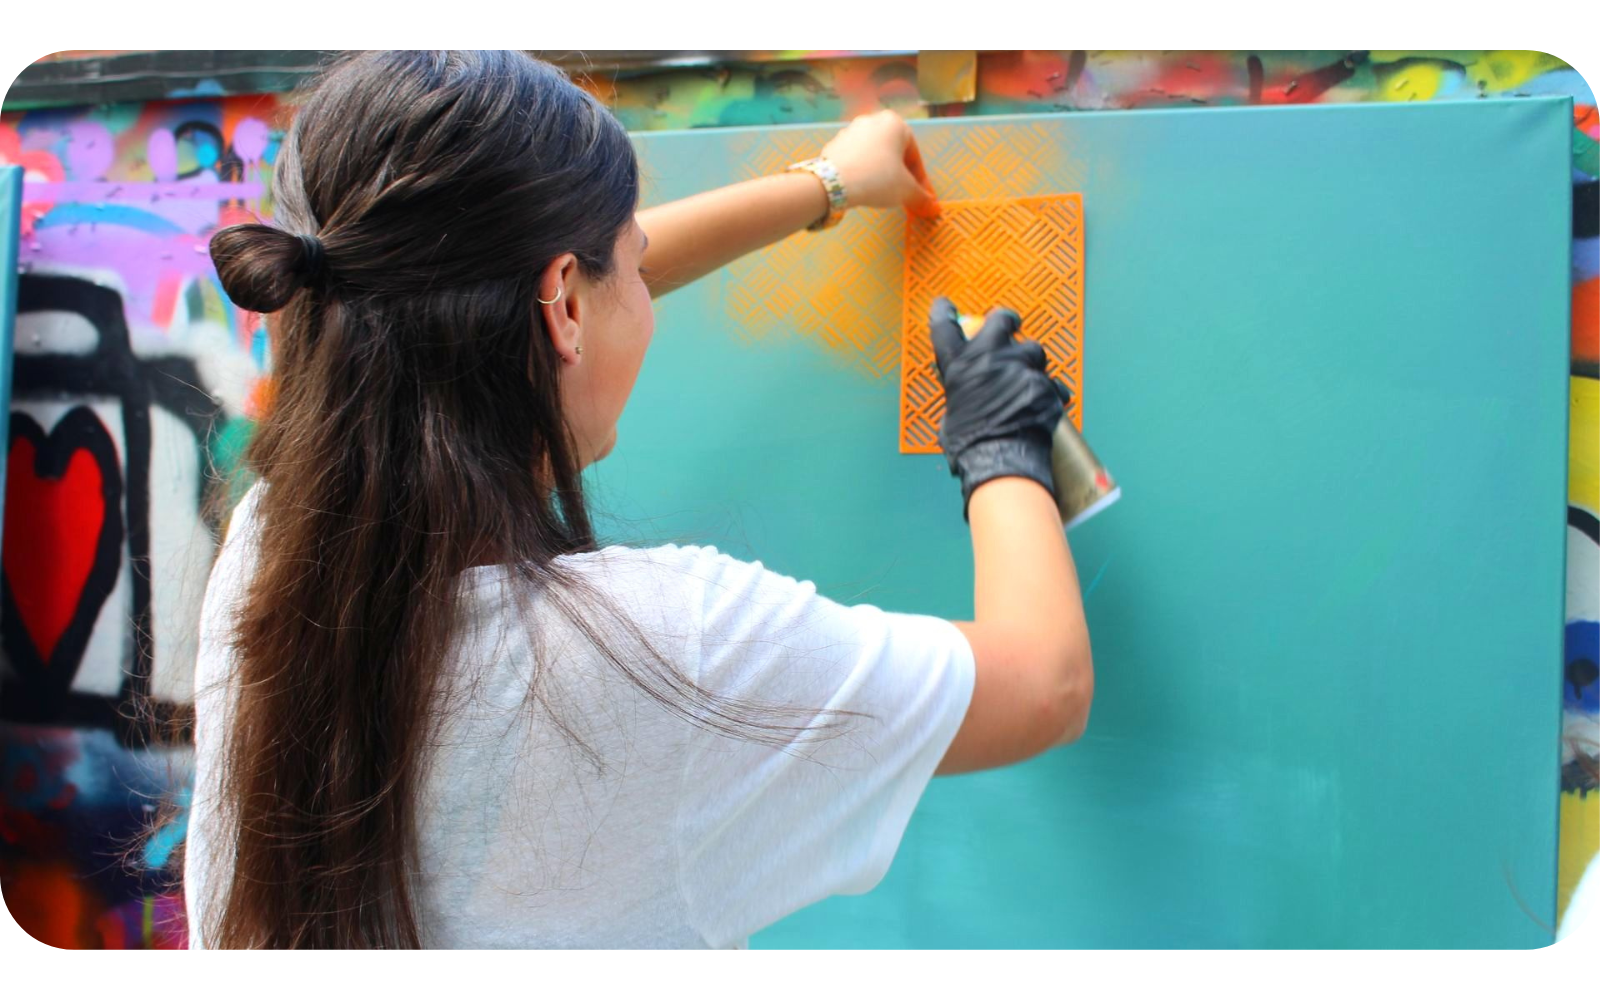 Meisje die bezig is met graffiti spuiten tijdens een grafitti workshop